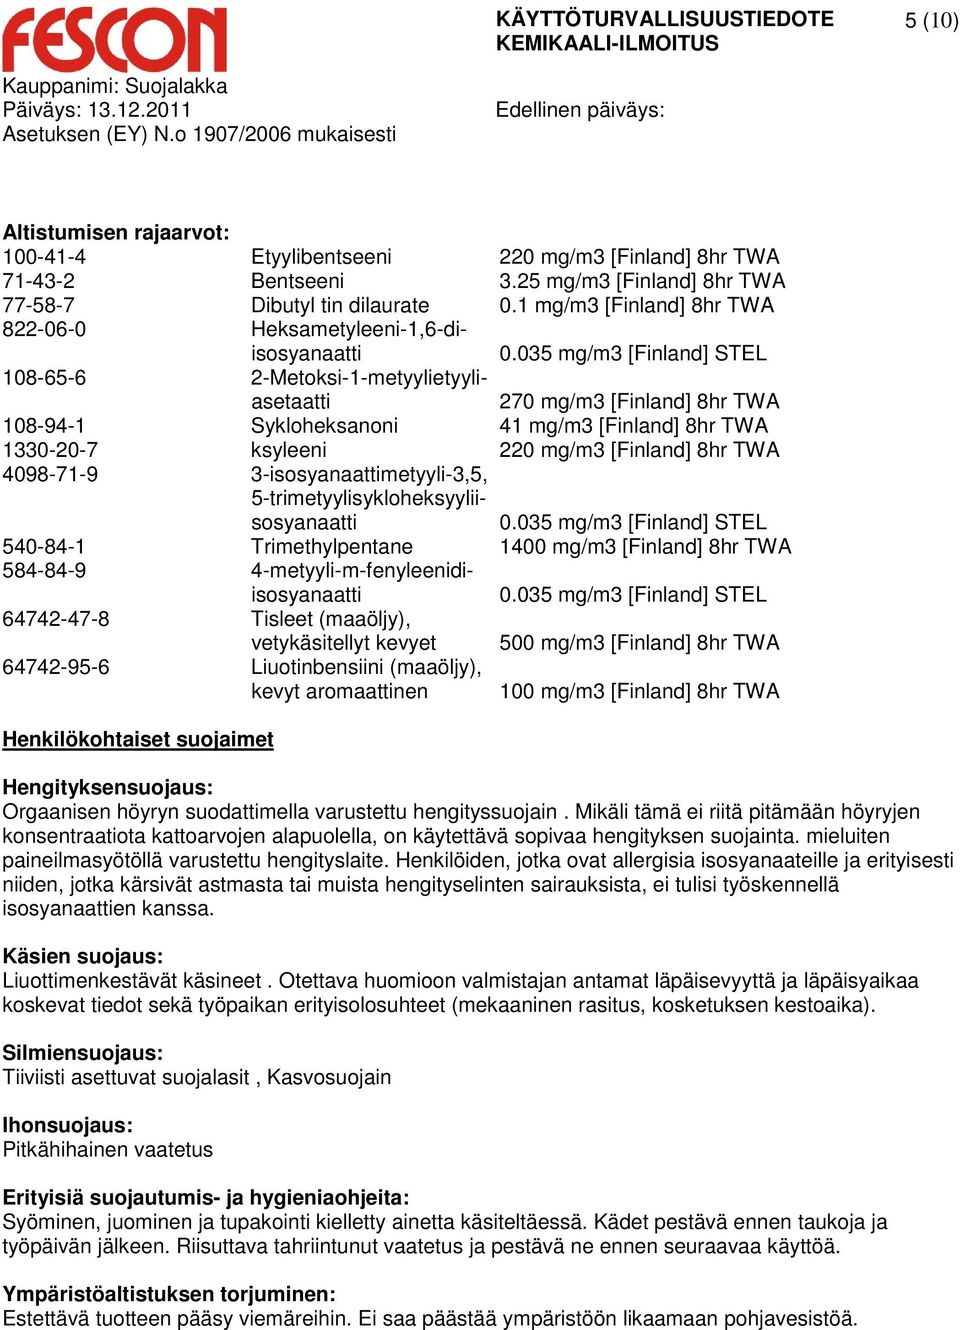 035 mg/m3 [Finland] STEL 108-65-6 2-Metoksi-1-metyylietyyliasetaatti 270 mg/m3 [Finland] 8hr TWA 108-94-1 Sykloheksanoni 41 mg/m3 [Finland] 8hr TWA 1330-20-7 ksyleeni 220 mg/m3 [Finland] 8hr TWA